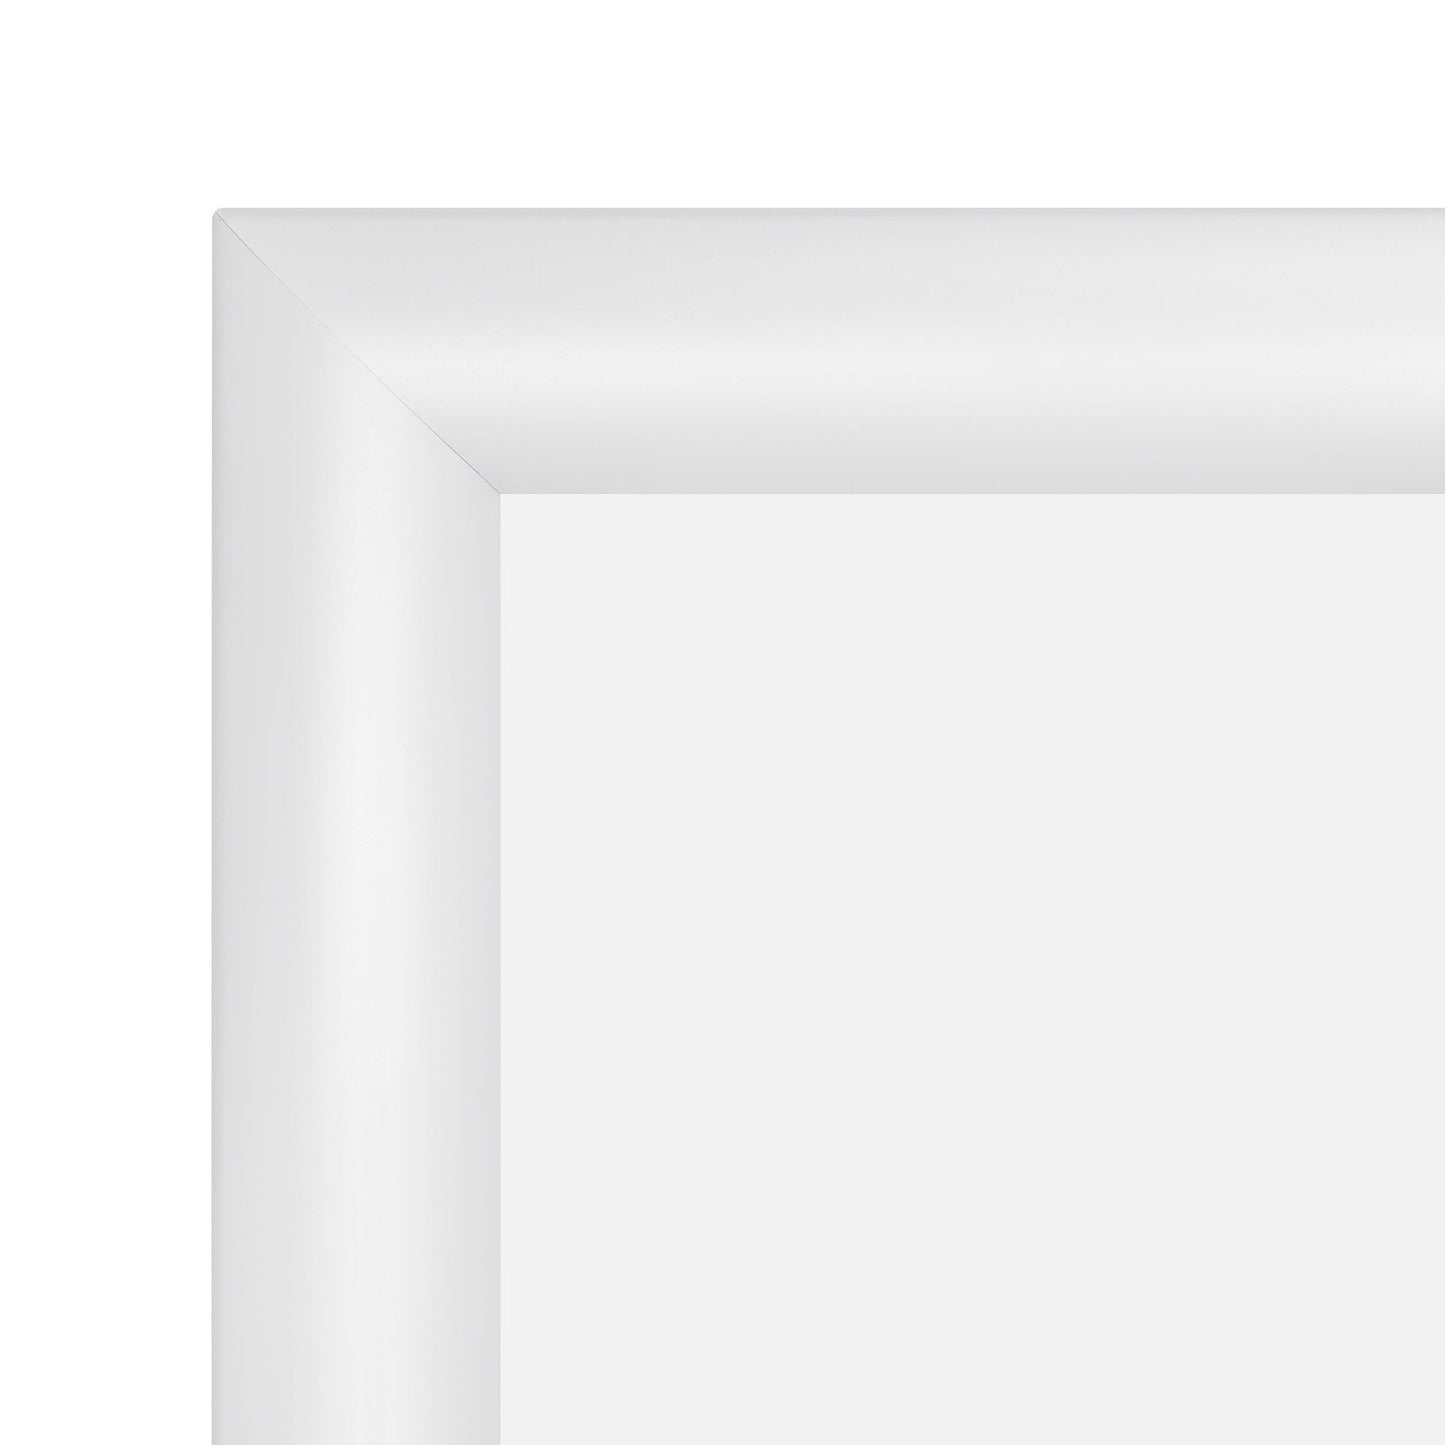 24x24 White SnapeZo® Snap Frame - 1.2" Profile - Snap Frames Direct